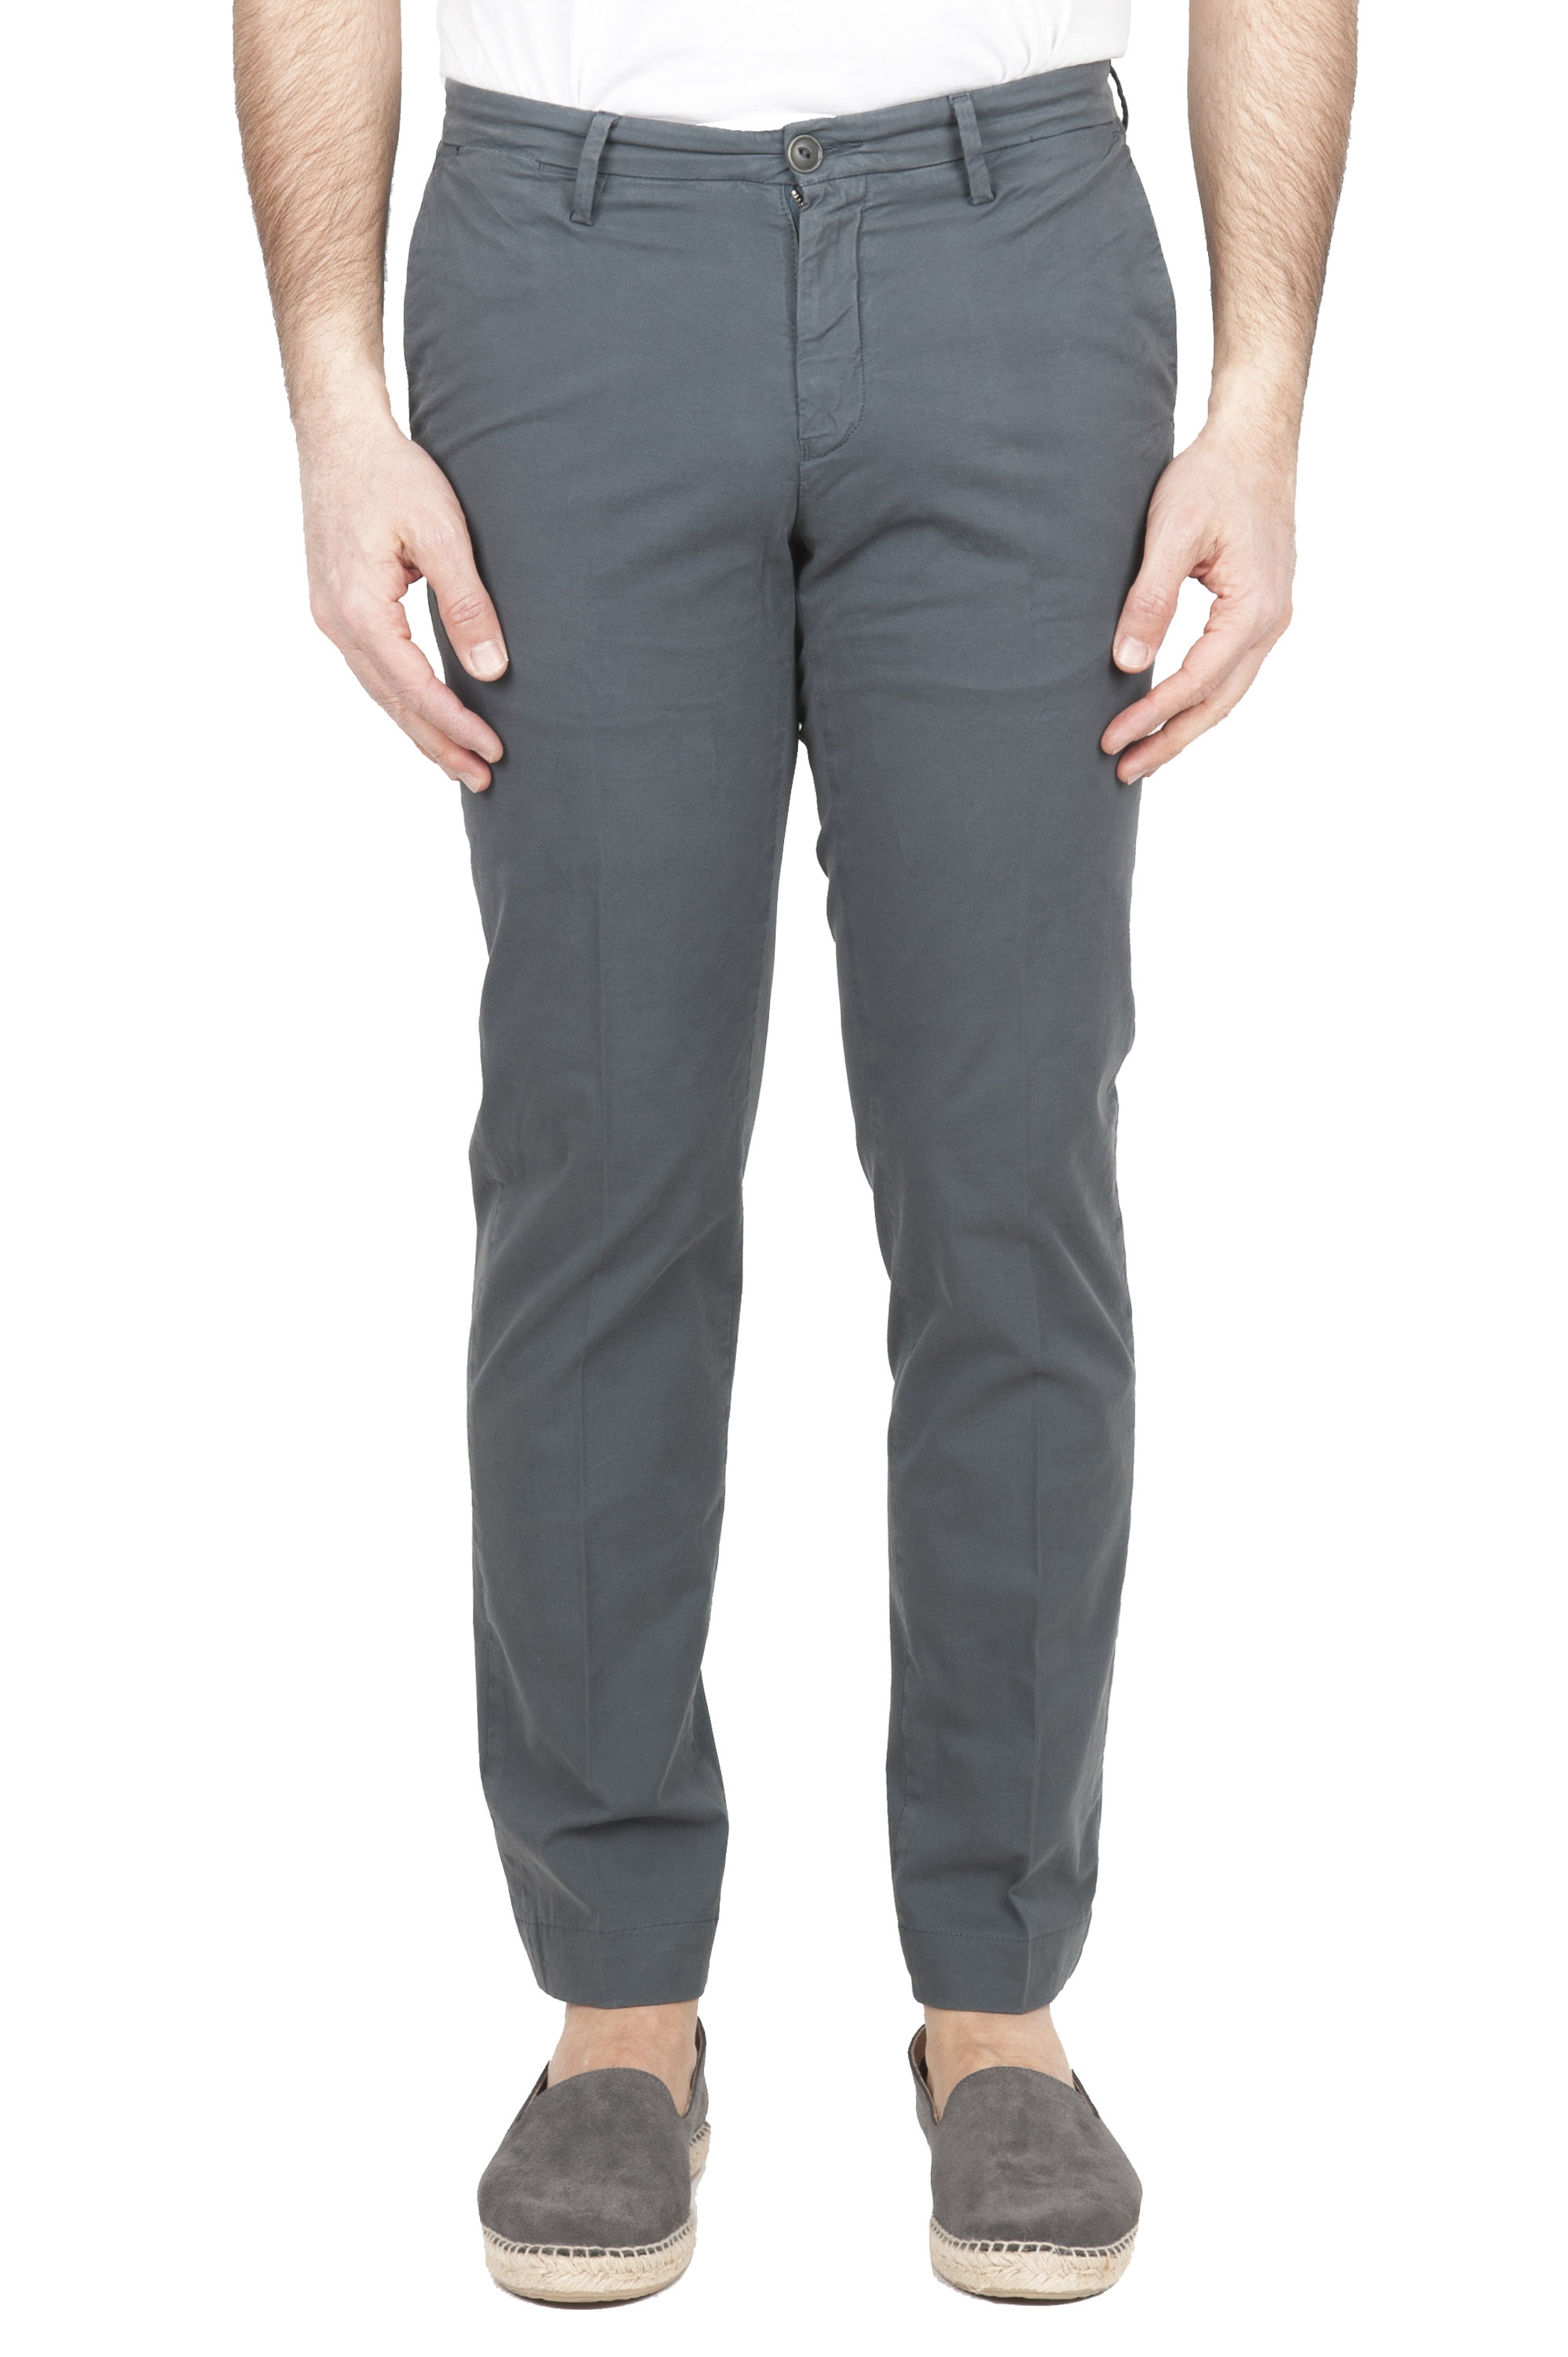 SBU 01682 Pantalon chino classique en coton stretch gris 01